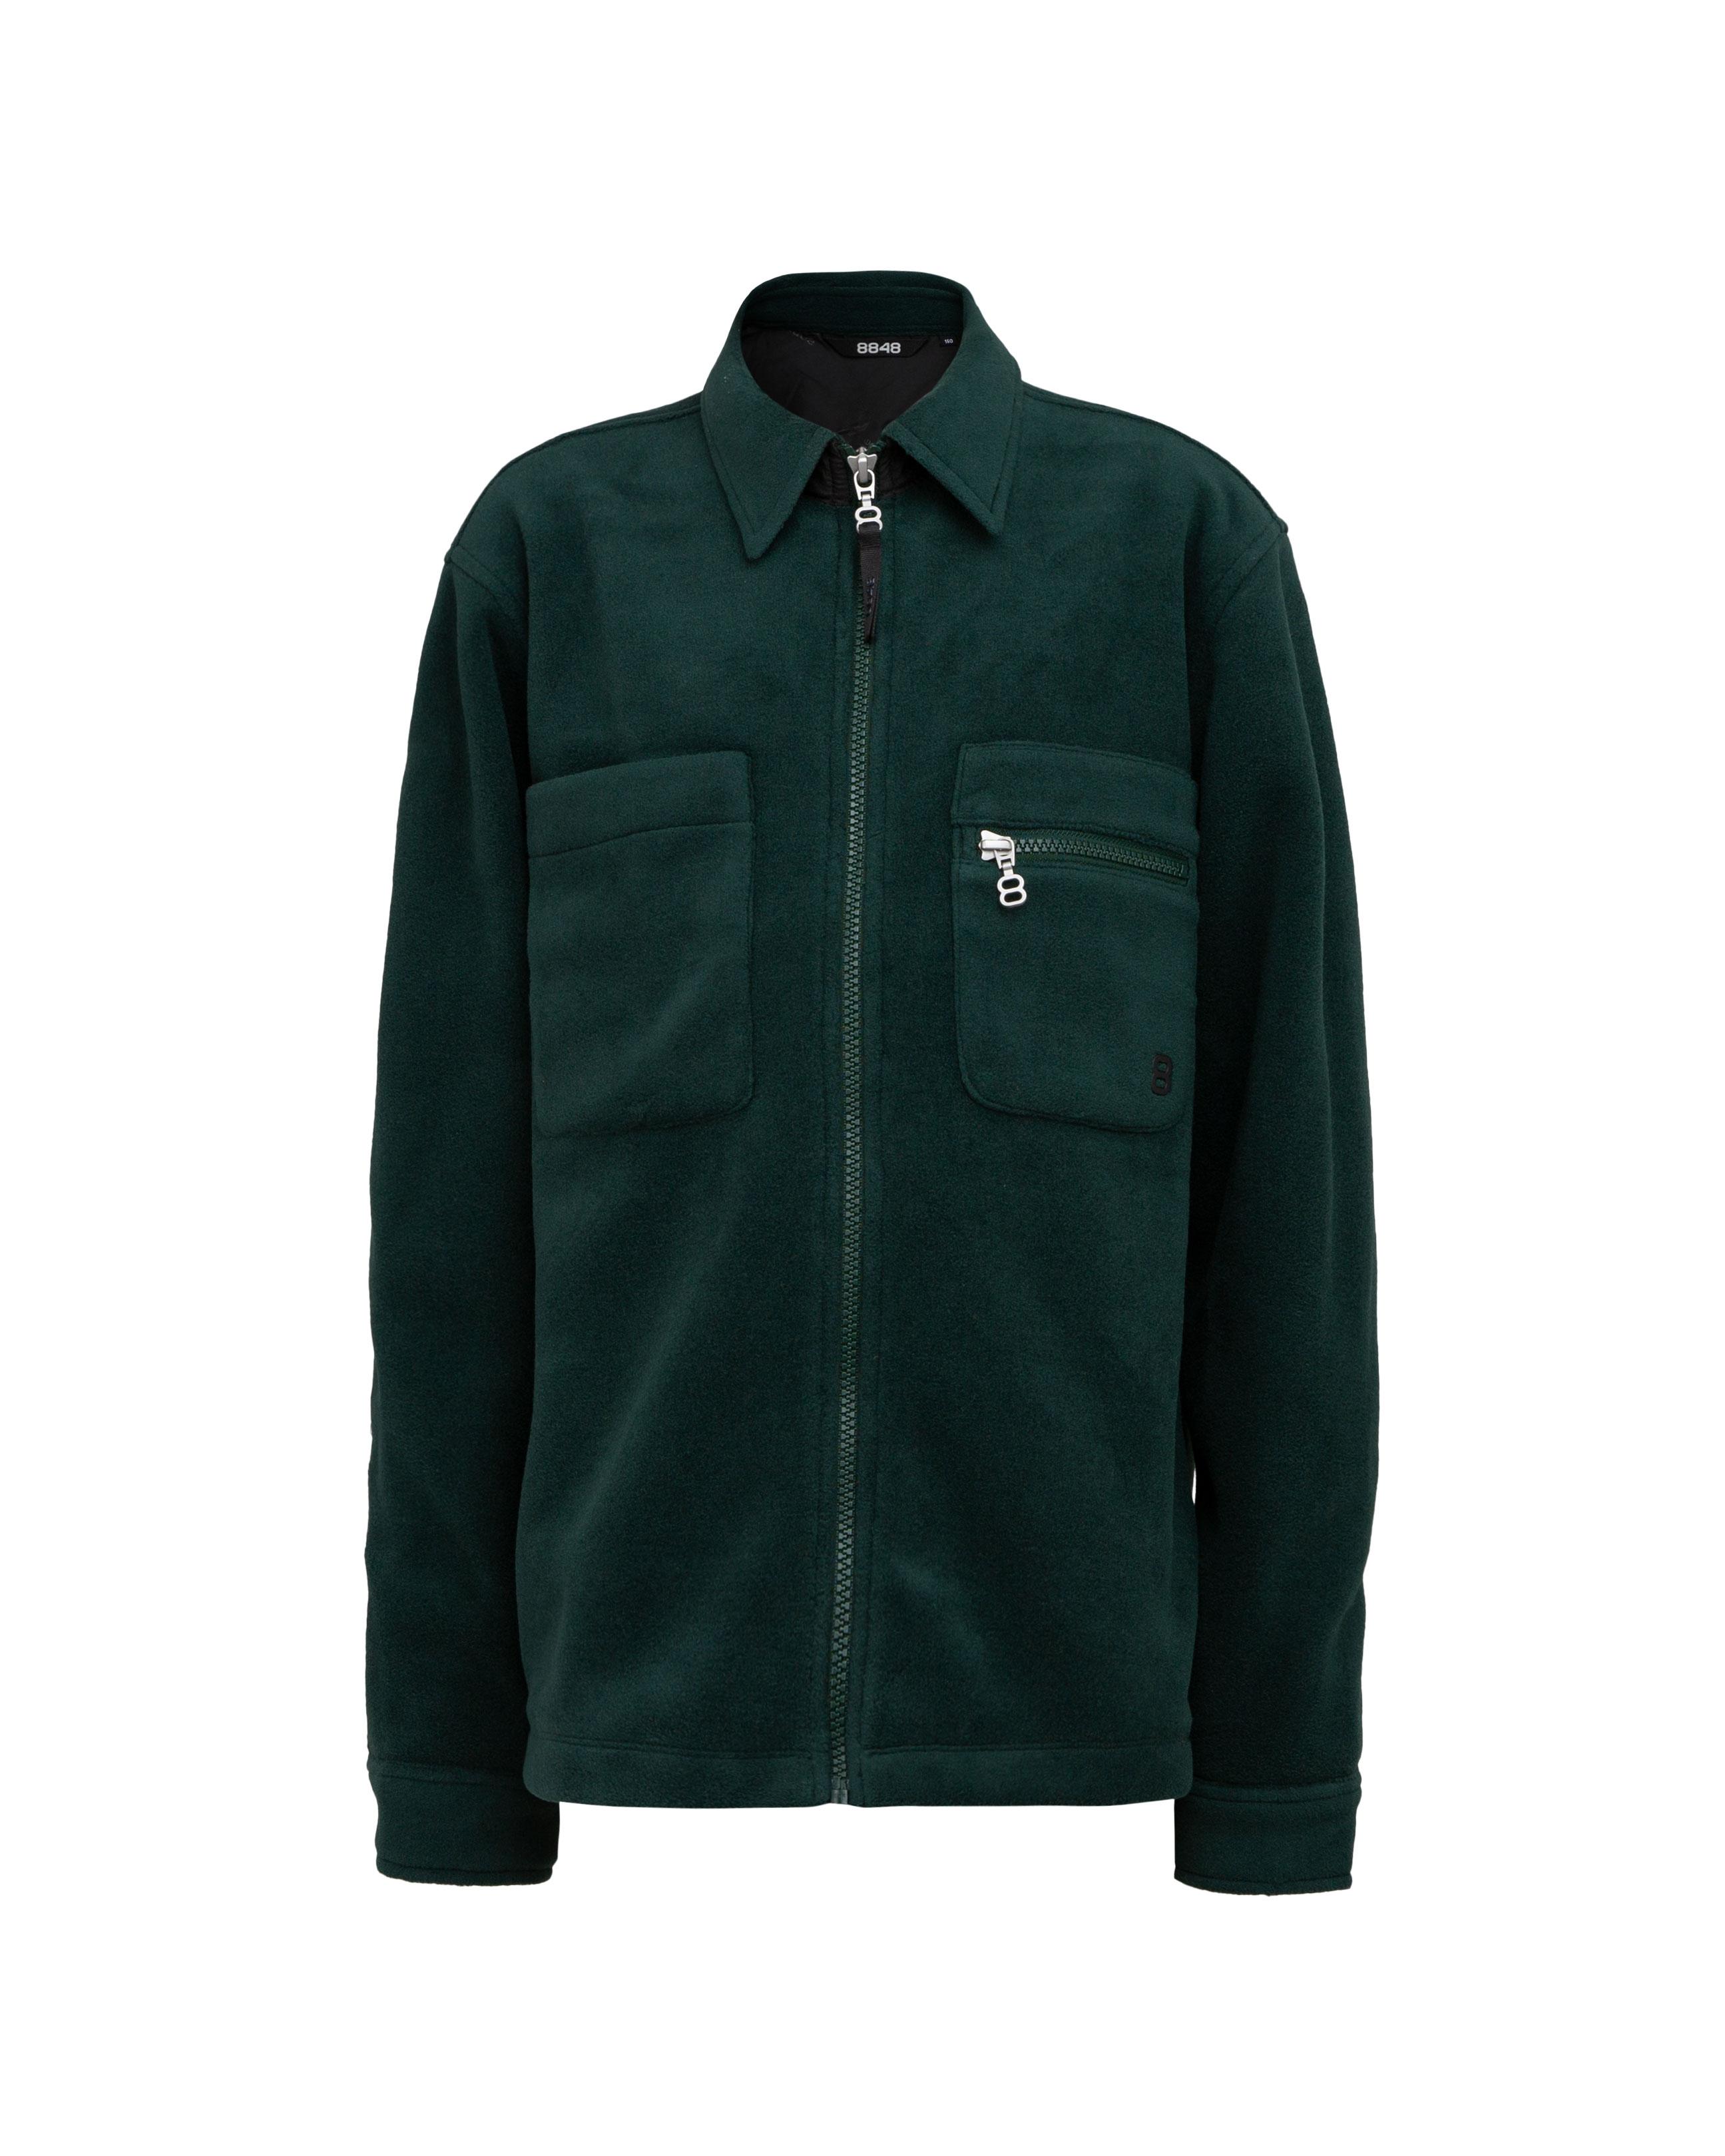 Heim JR Fleece Jacket Emerald Green - Grüne Fleece Kinder